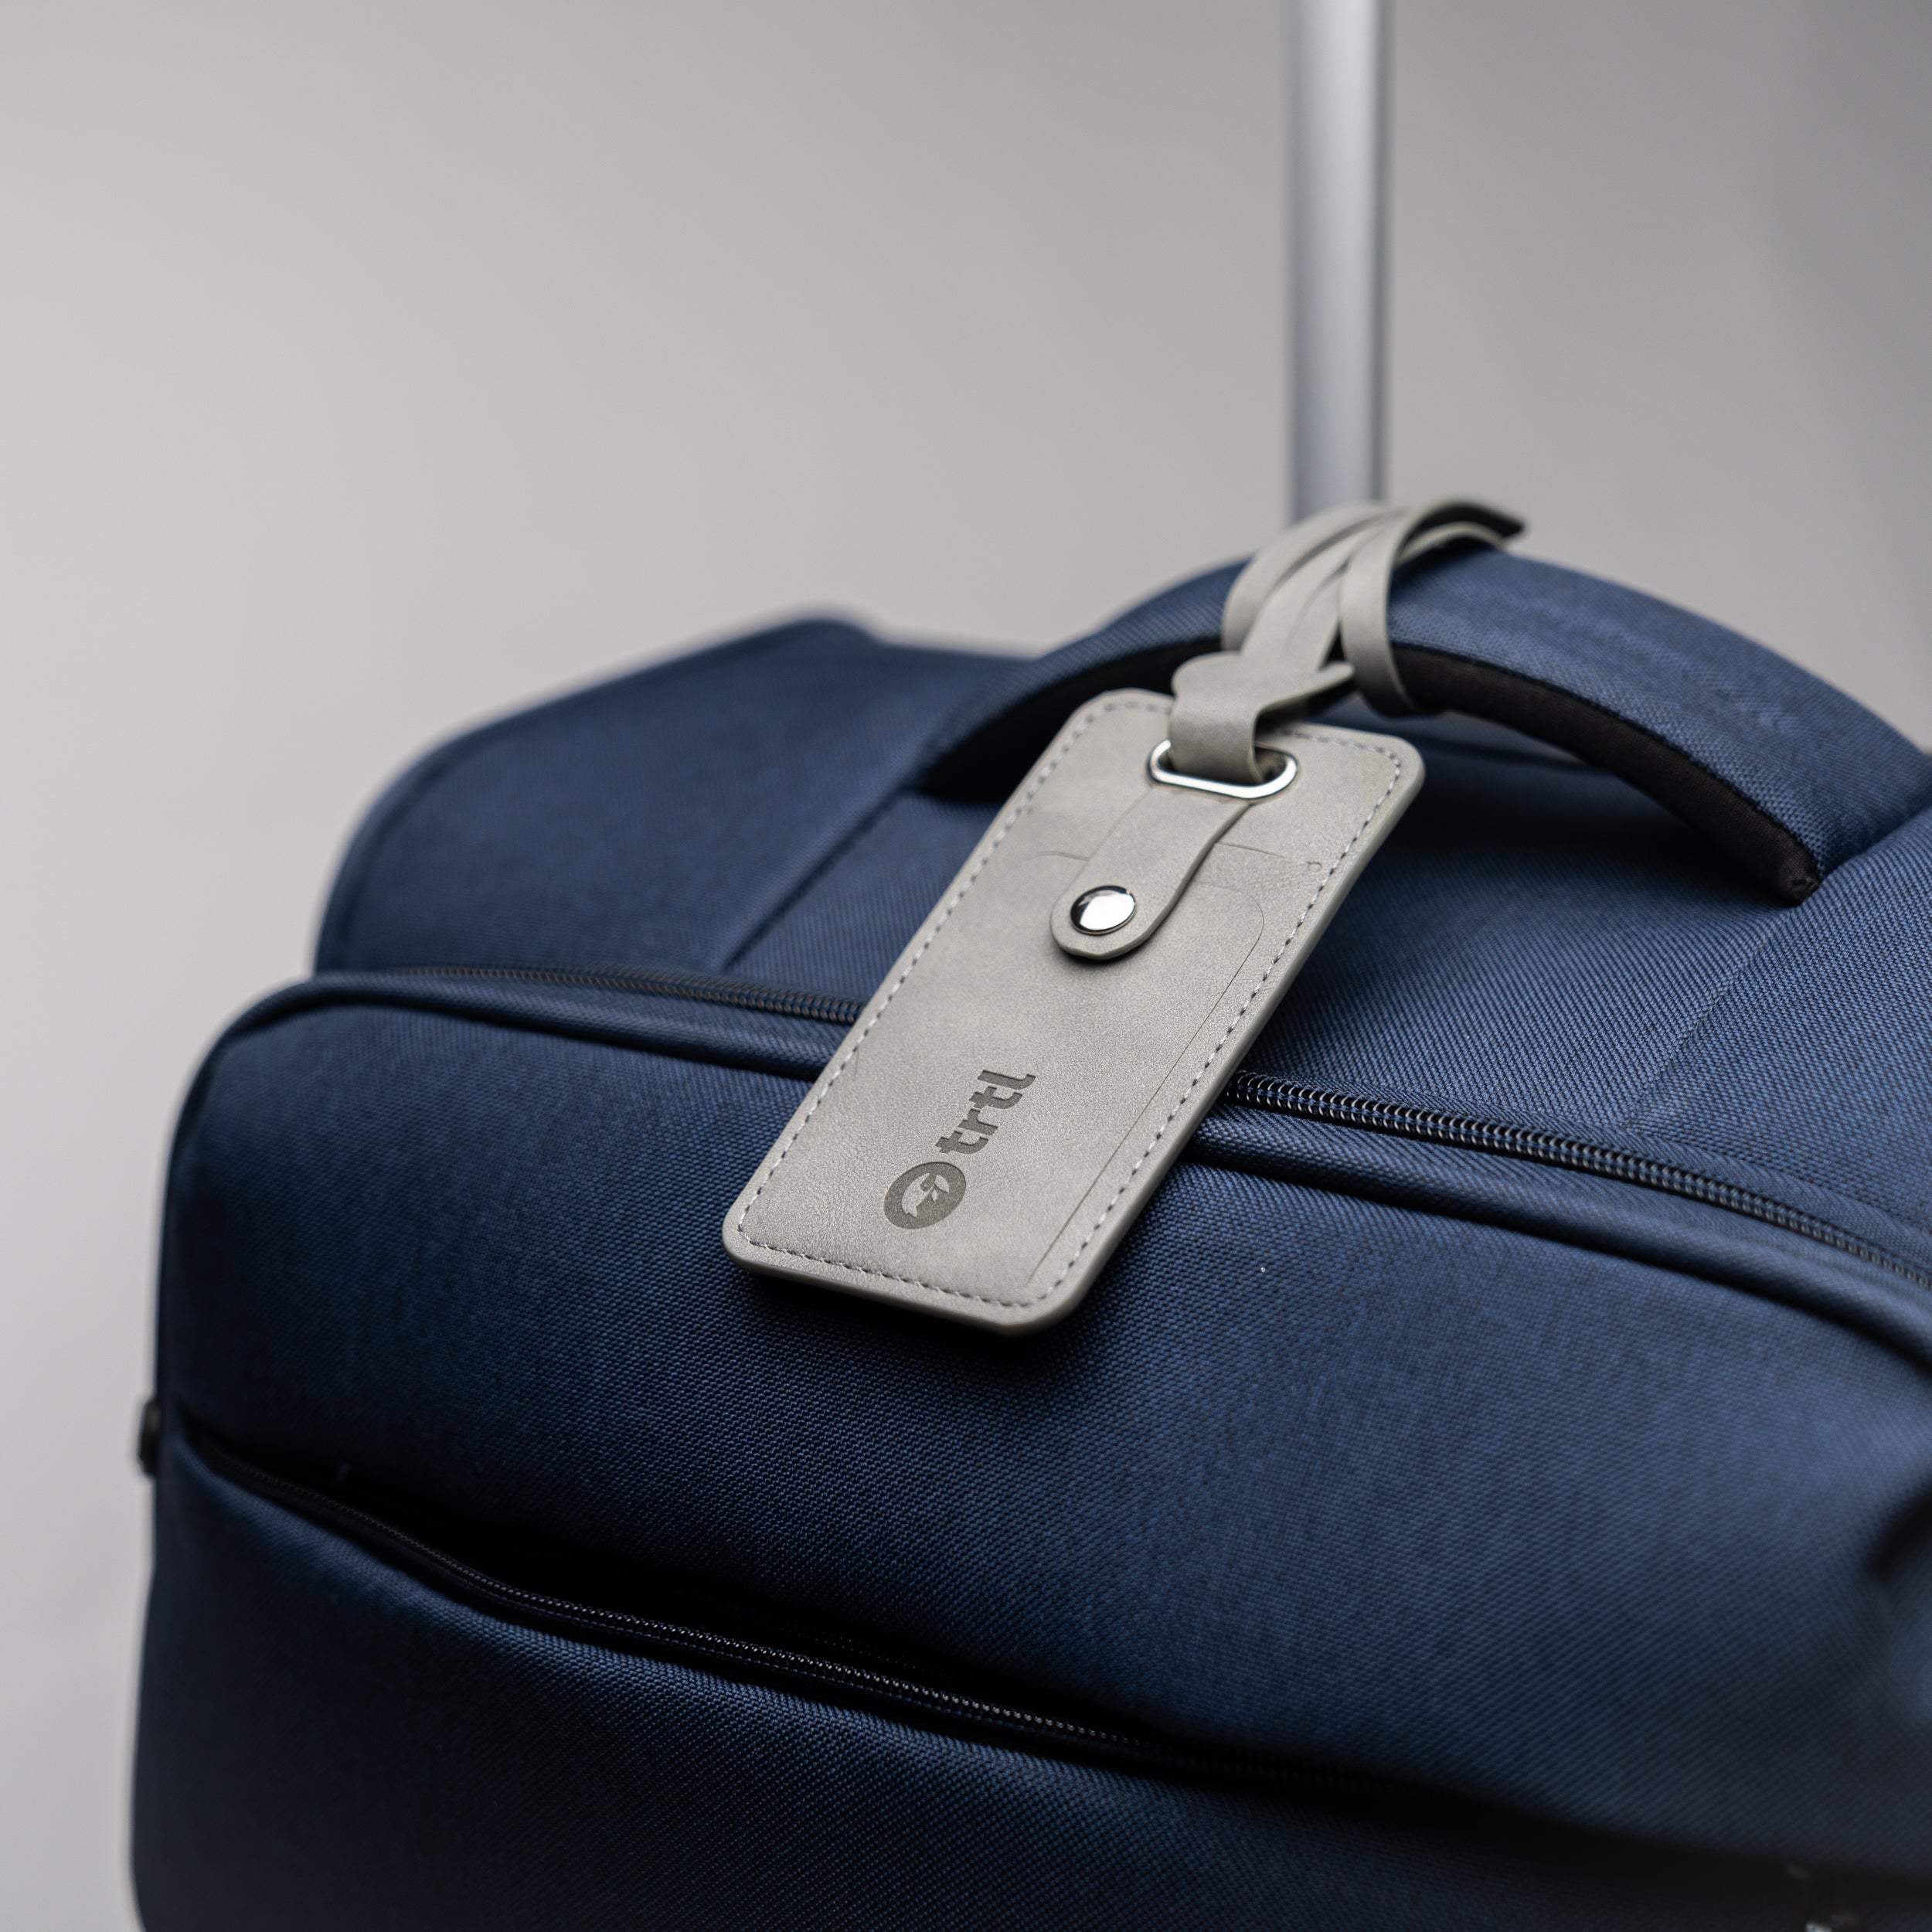 TRTL Travel Luggage Tag | Travel Luggage Tag | Airplane Luggage Tag | Luggage Tag for Travel